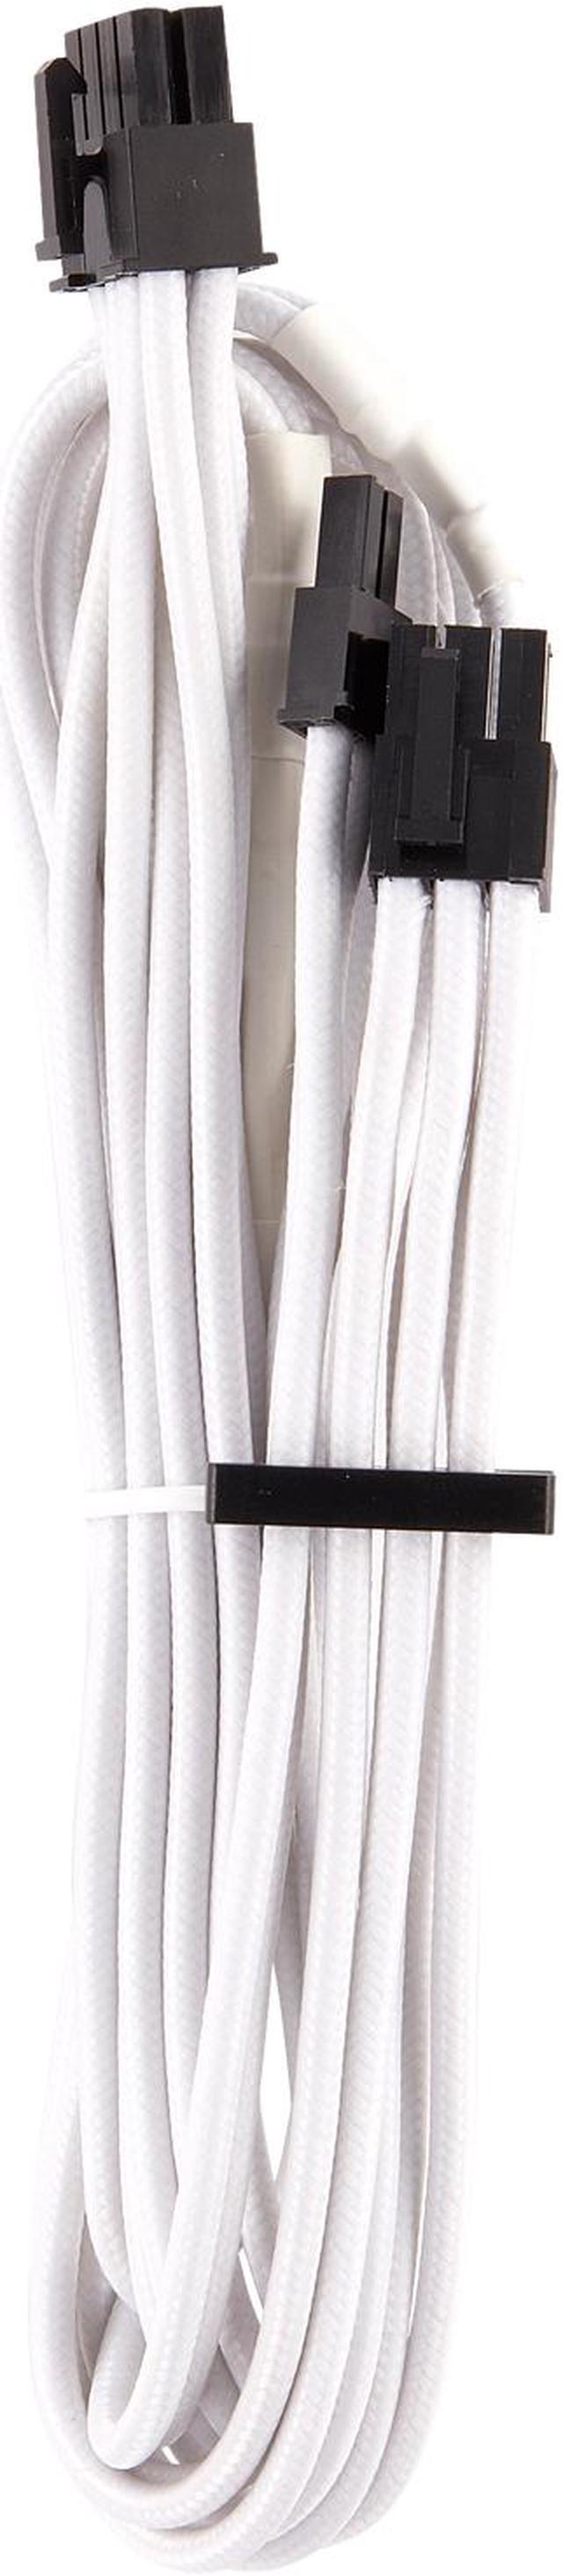 PSU Cables Kit, Individually Sleeved Starter Premium Corsair White